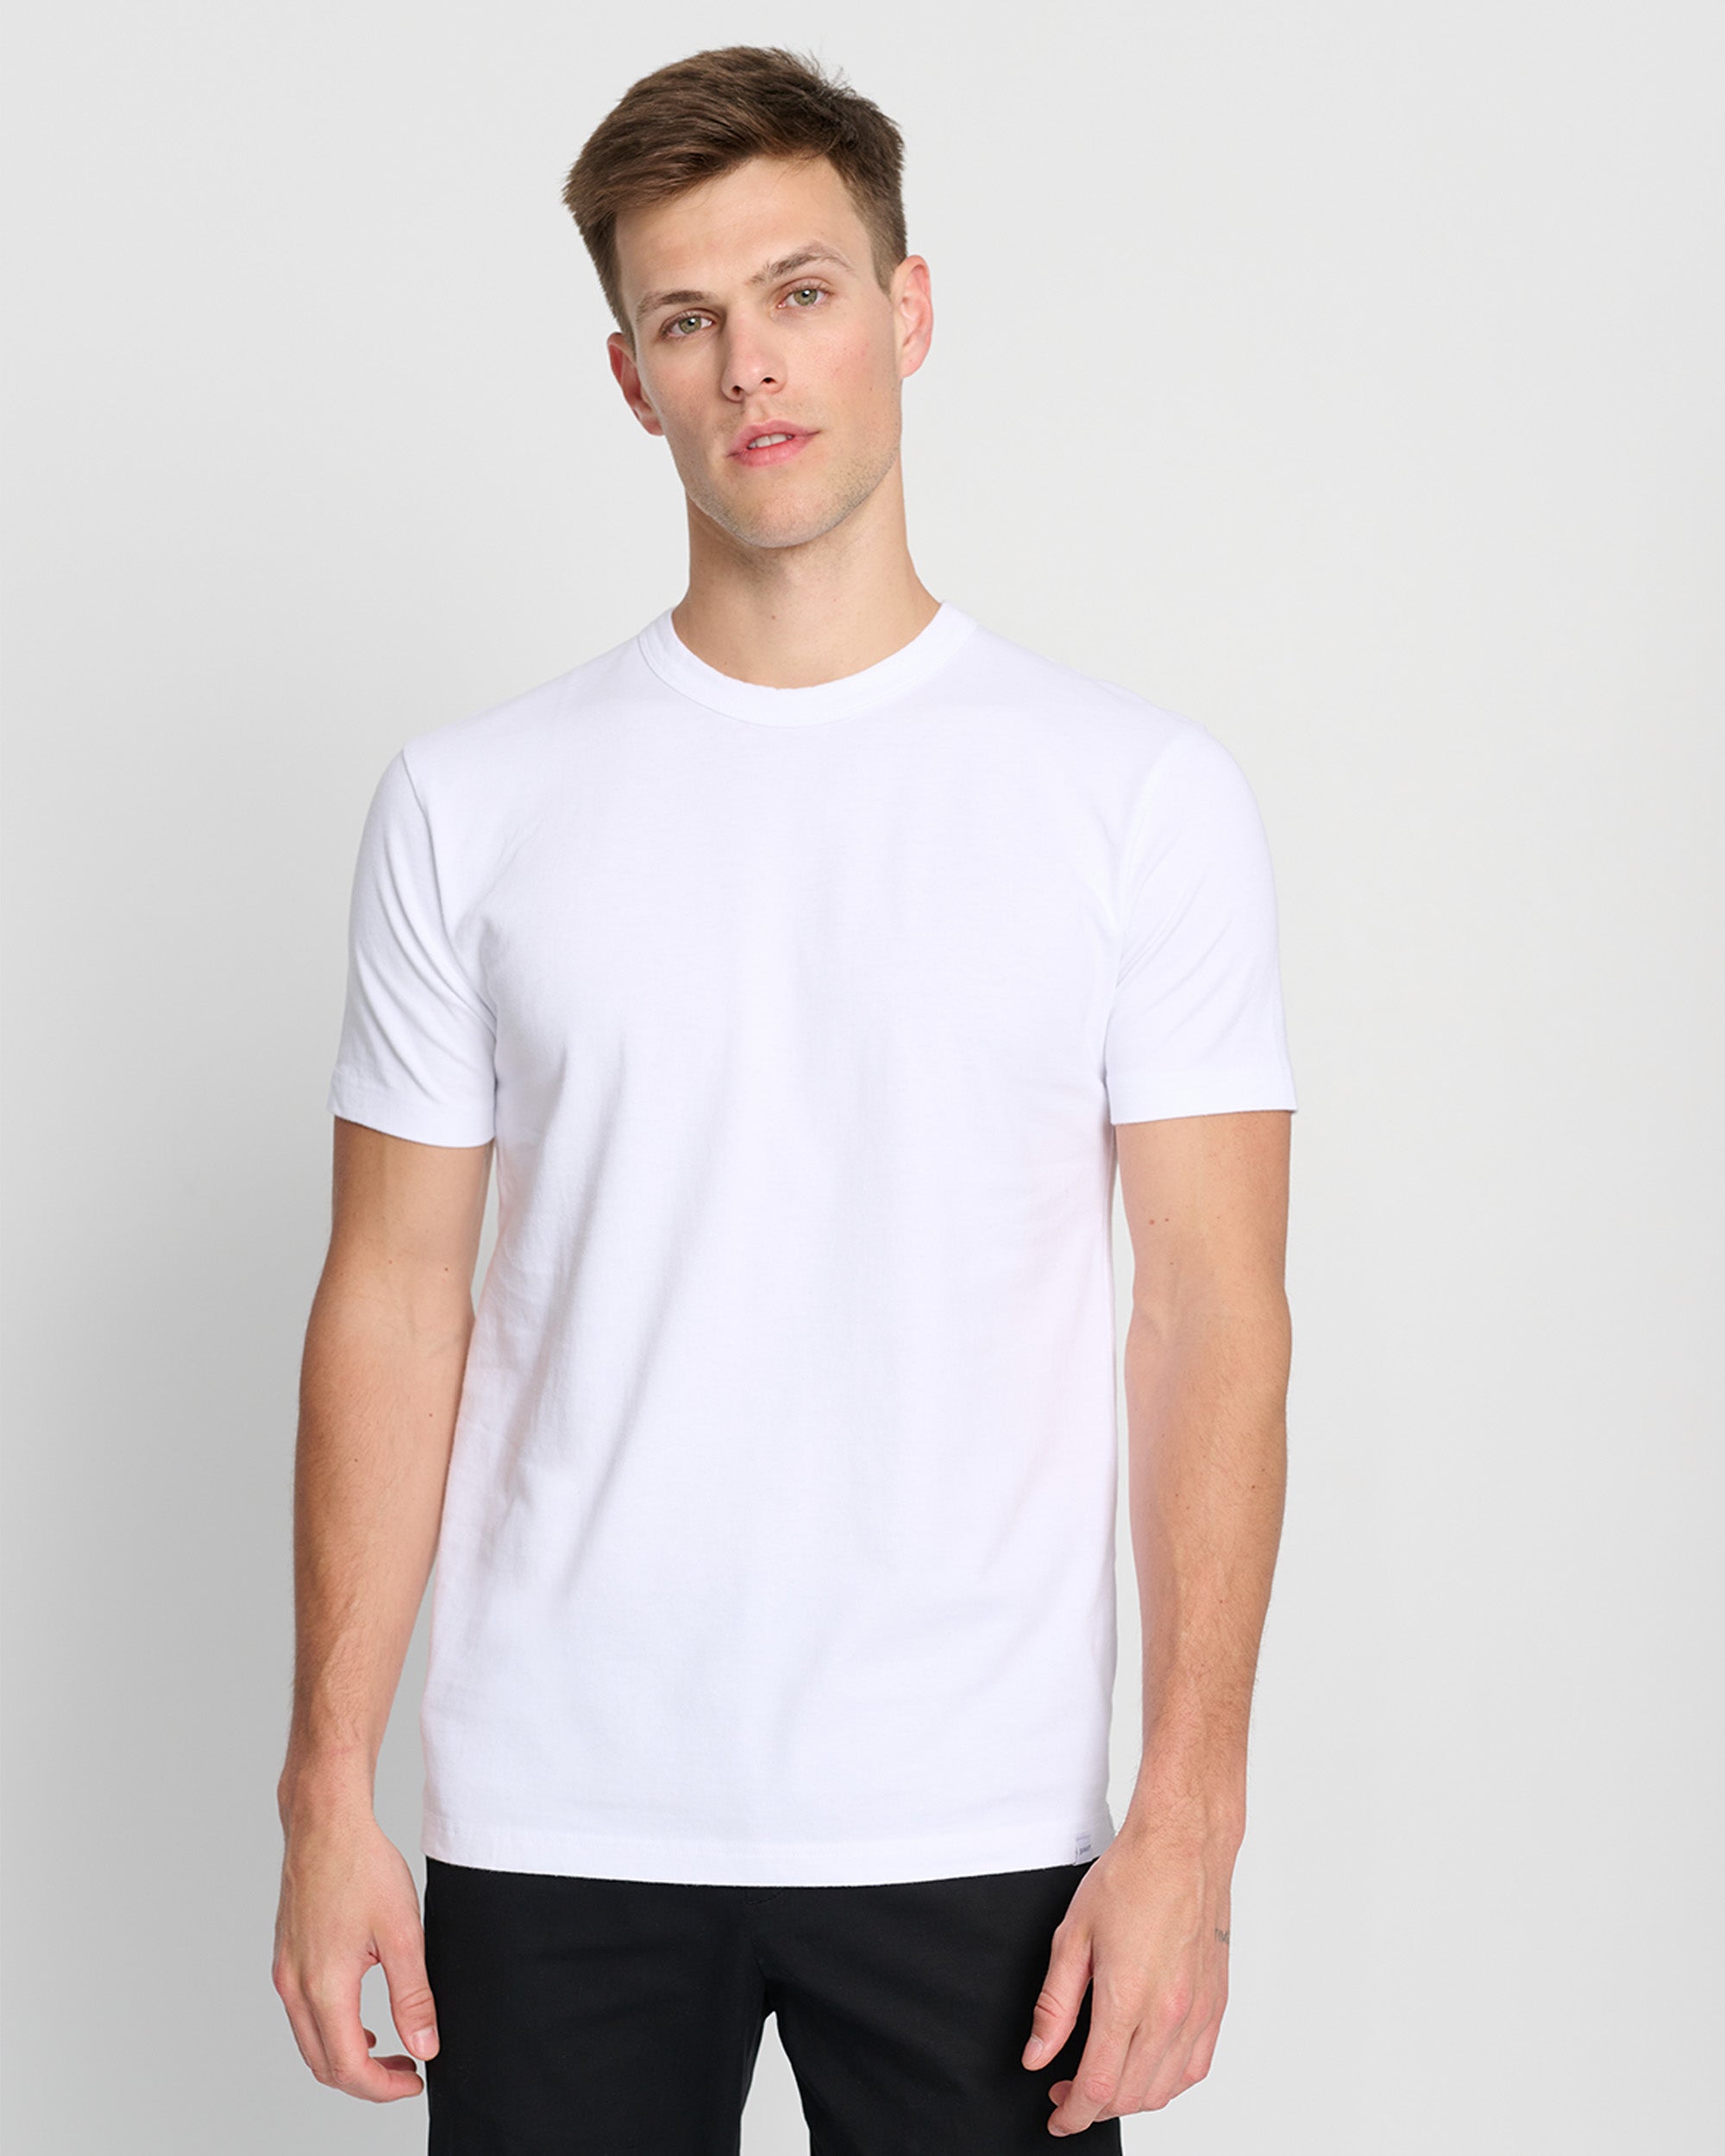 The Heavyweight T-Shirt for Men | High Quality Winter Cotton T-Shirt